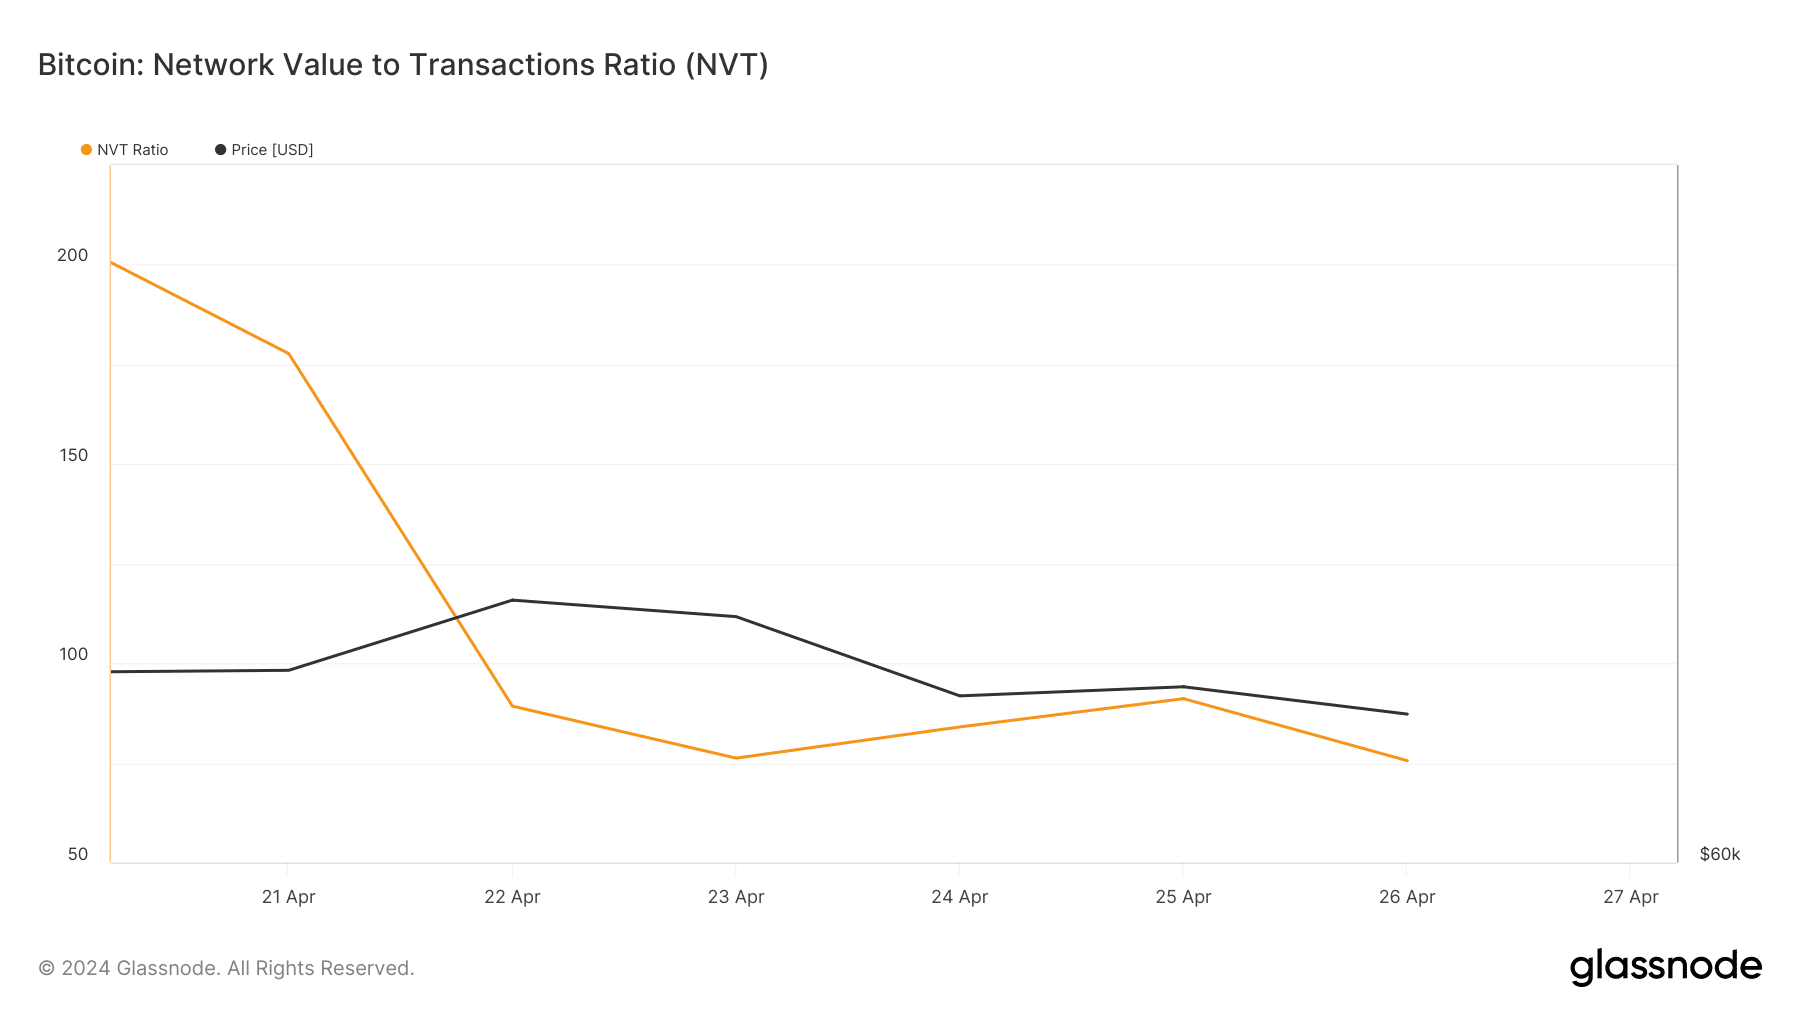 BTC’s NVT ratio has decreased